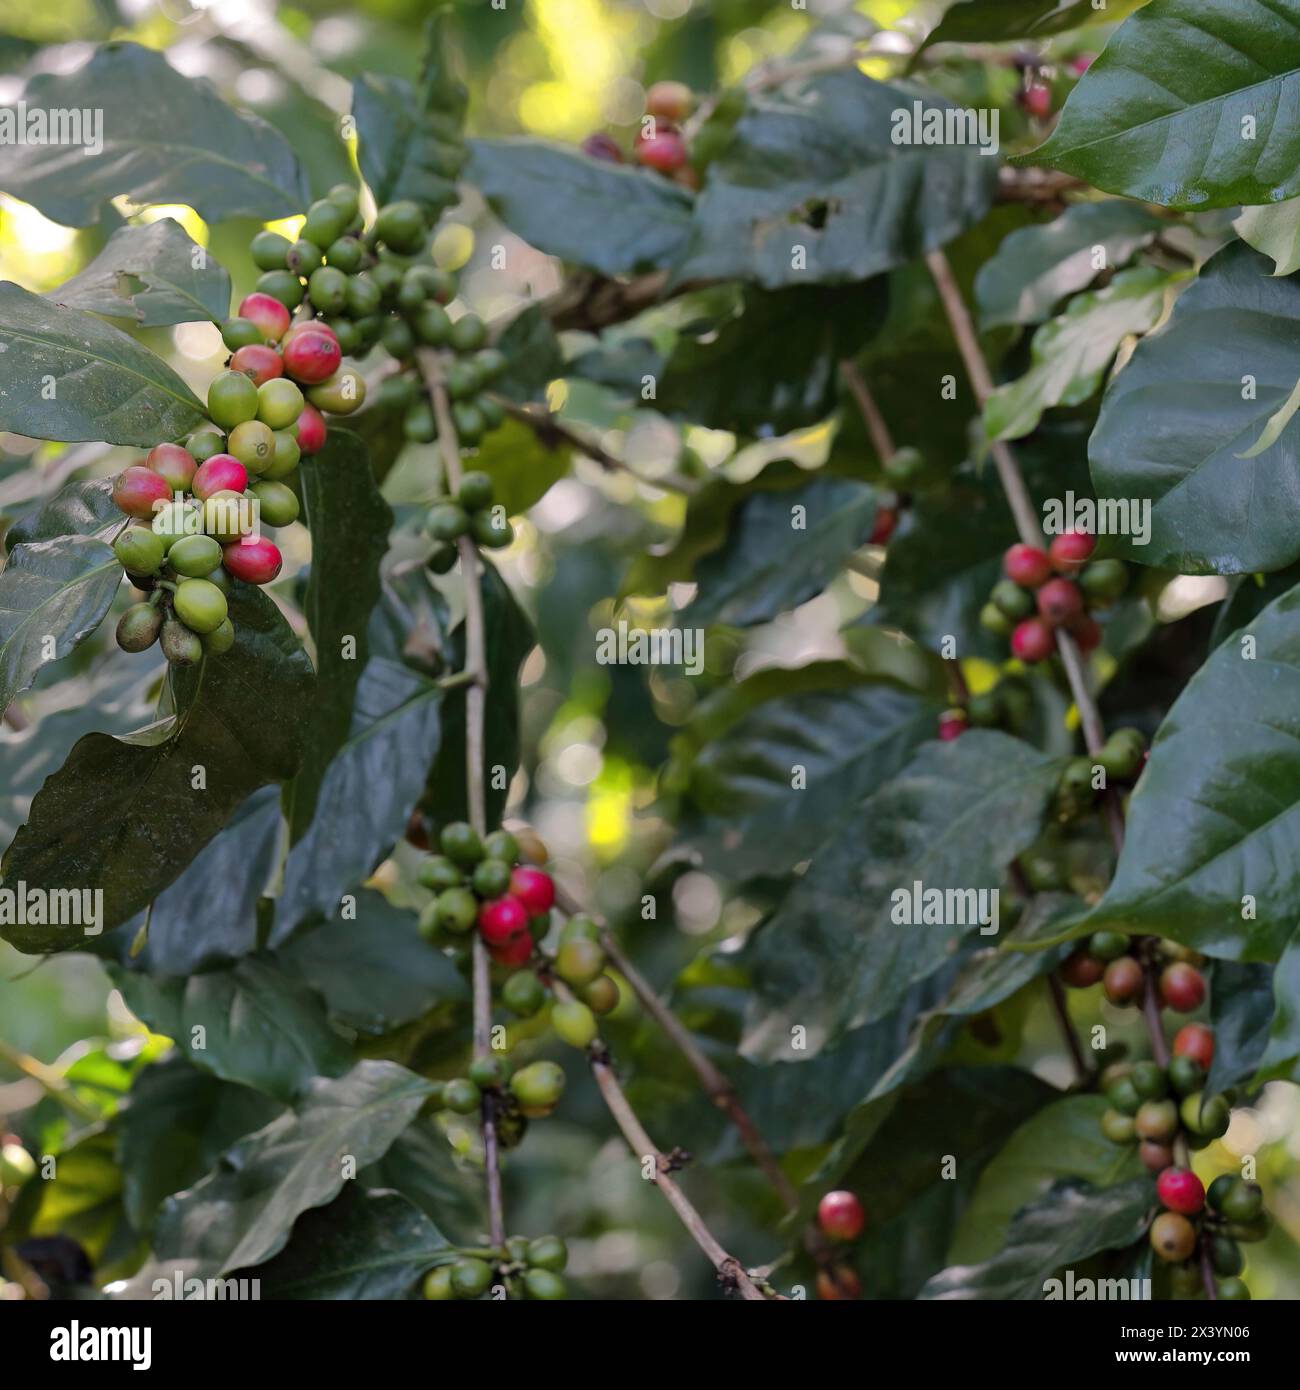 209 Green and ripe Arabica coffee -Coffea arabica- beans, plant growing along the Sendero Centinelas del Rio Melodioso Hike. Cienfuegos province-Cuba. Stock Photo